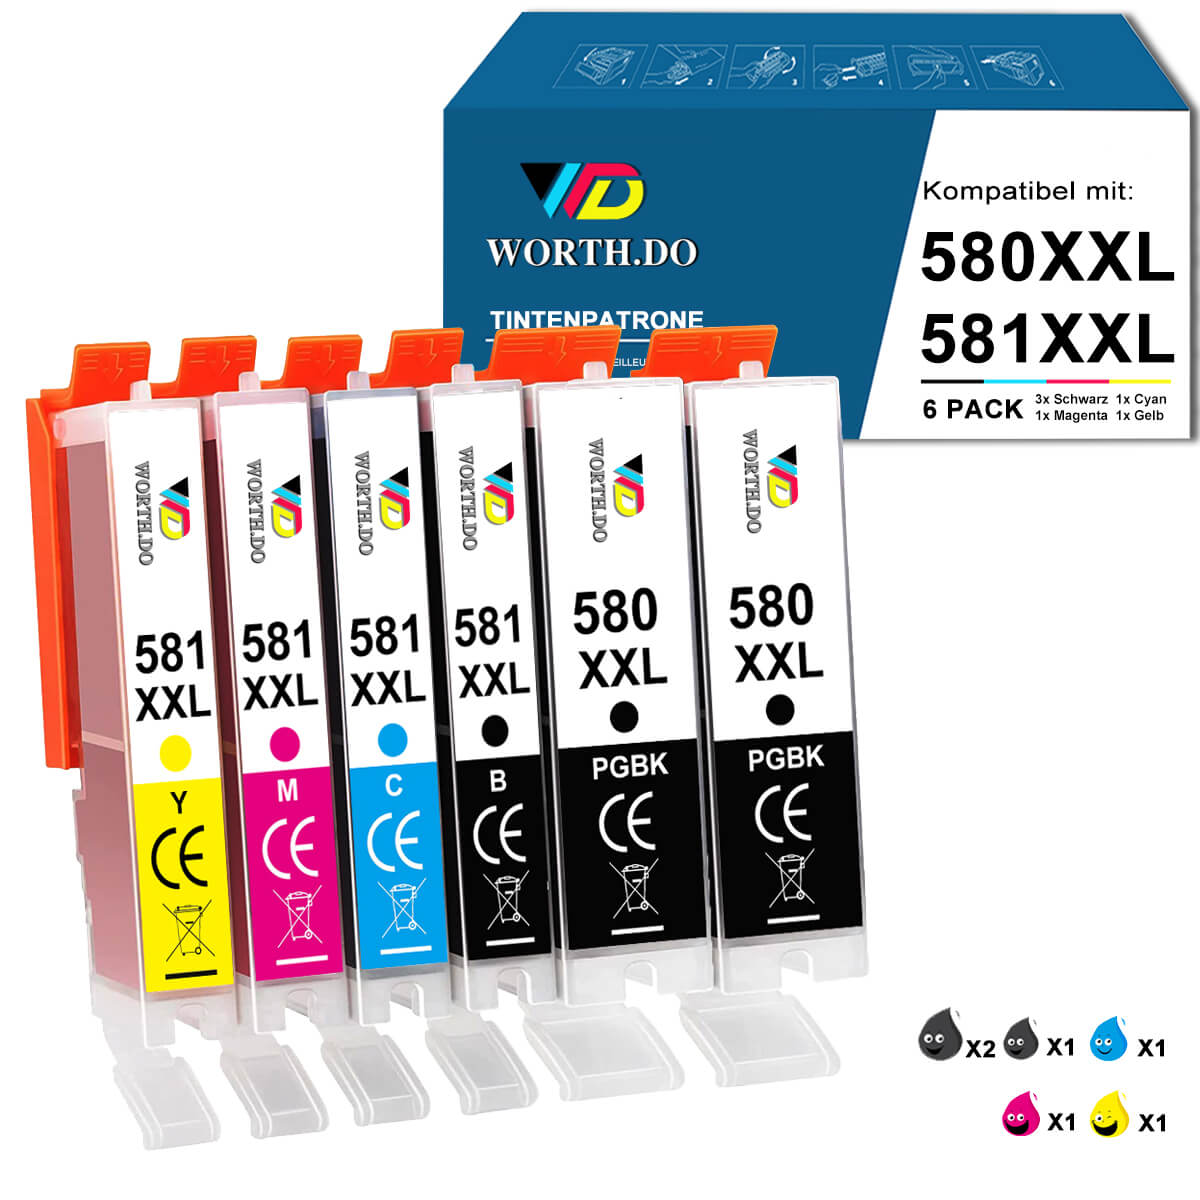    kompatible-tintenpatronen-fuer-canon-pgi-580xl-cli-581xl-6pack-worth.do